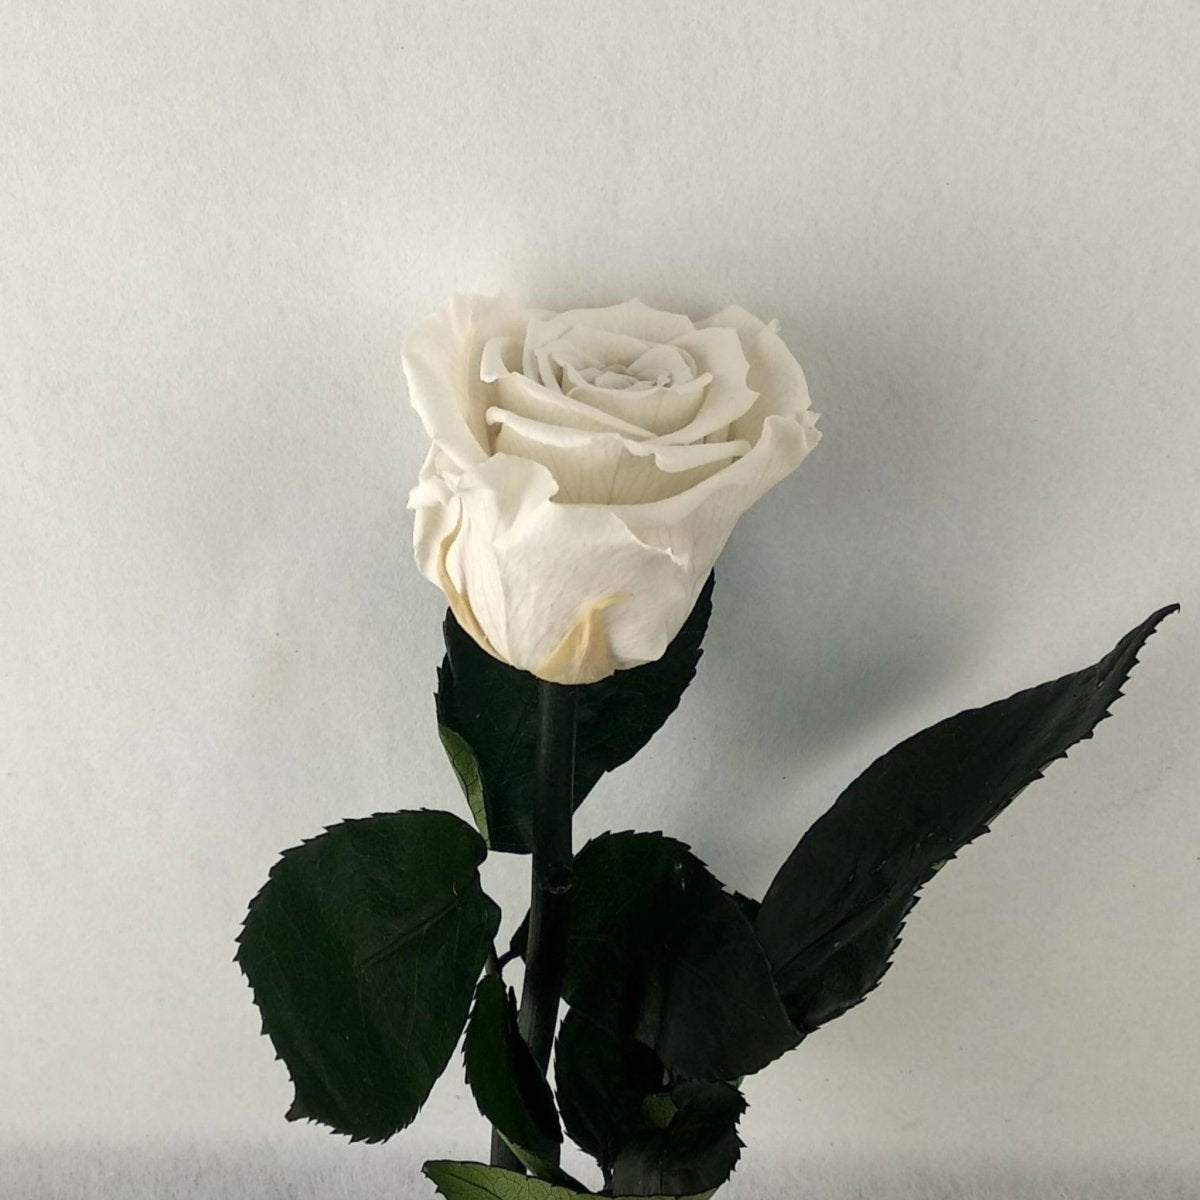 Rosa eterna preservada de Floréate Floreate